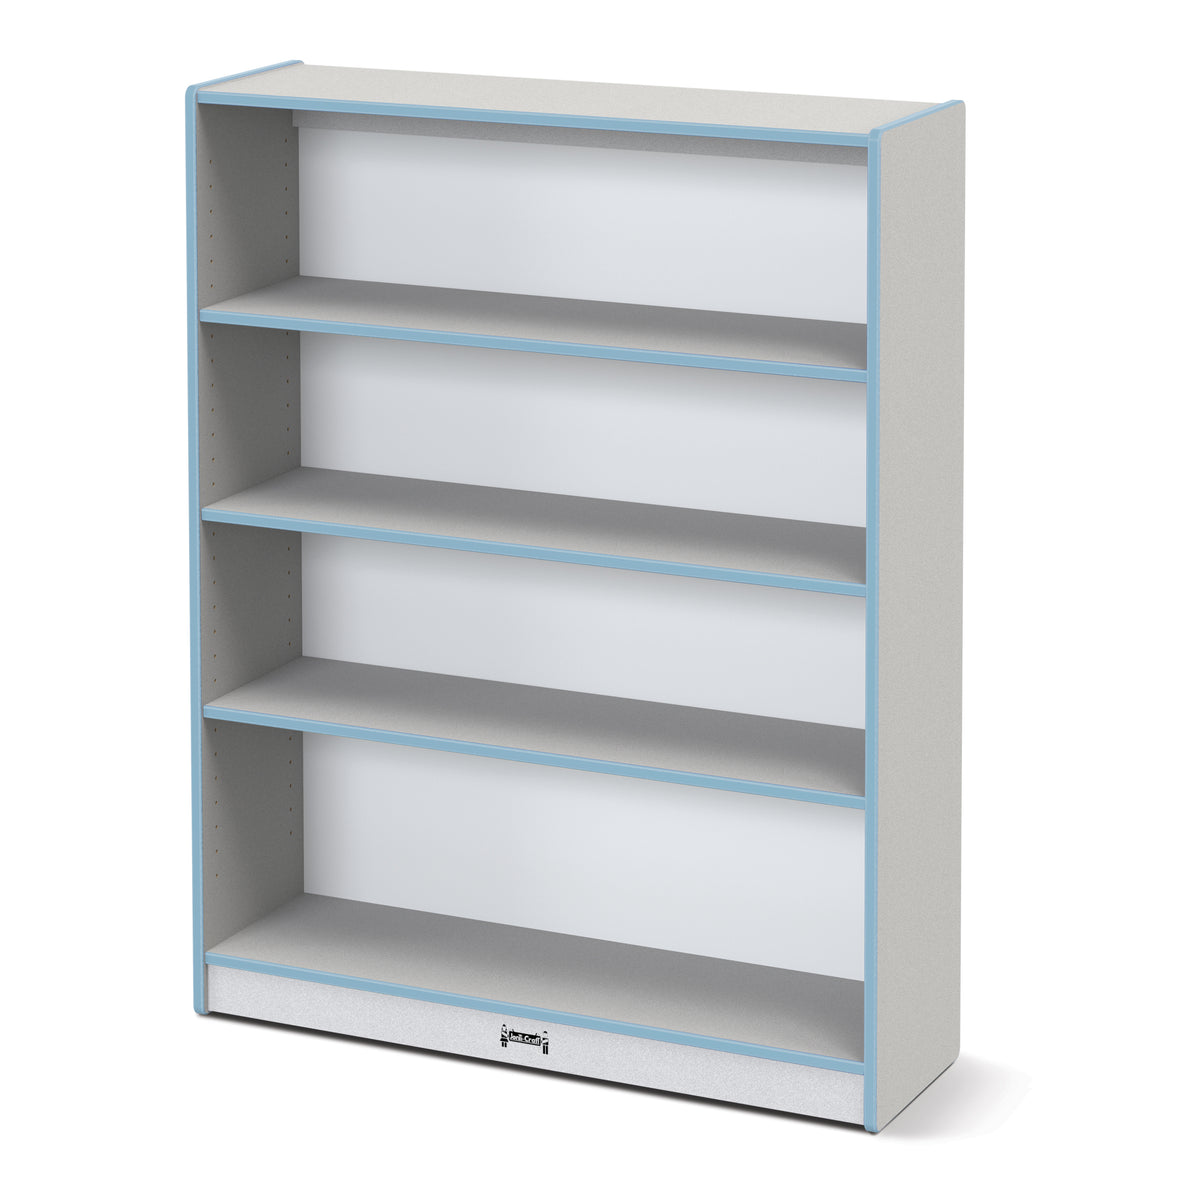 0971JC131, Rainbow Accents Standard Bookcase - Coastal Blue